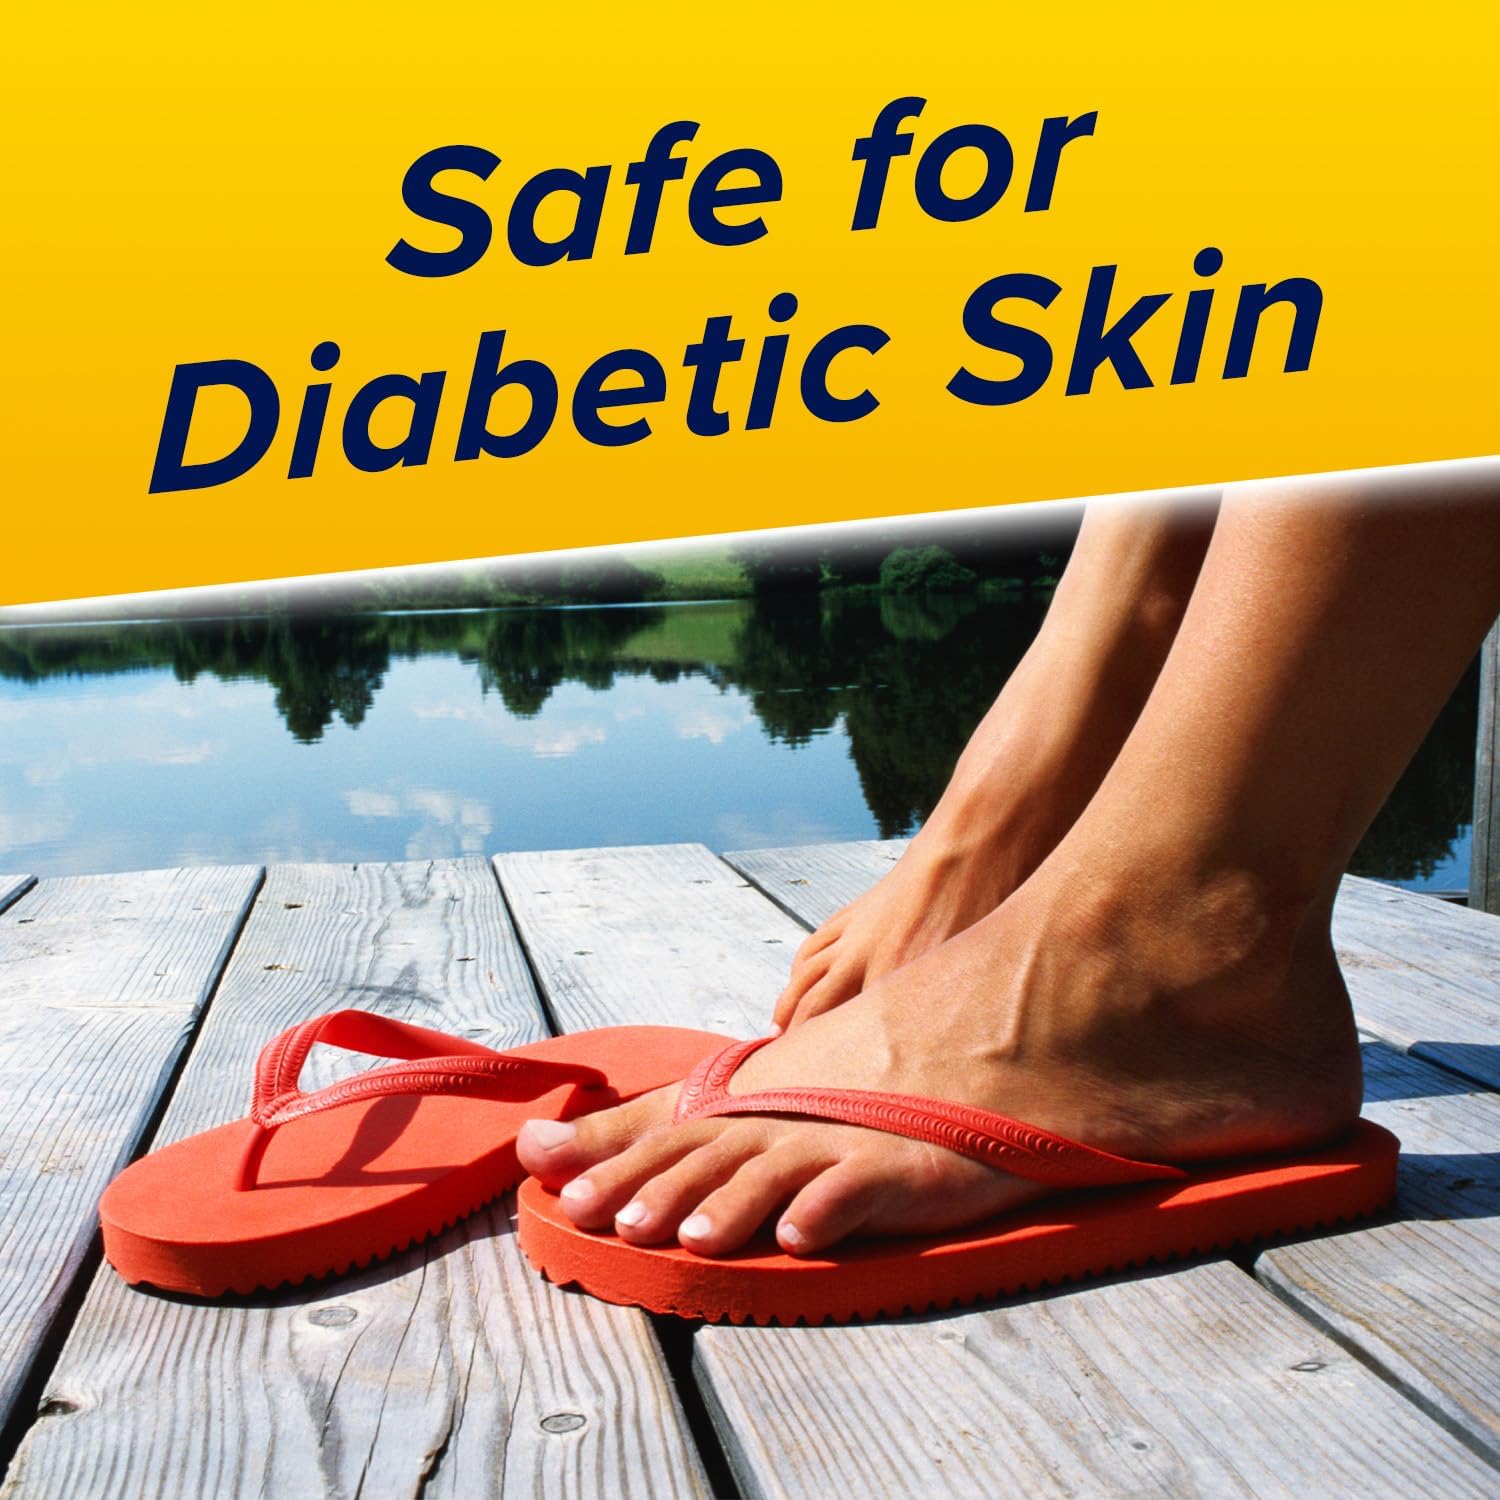 Aspercreme Odor Free Lidocaine Foot Pain Relief Cream, 4 oz., Safe for Diabetic Skin : Health & Household